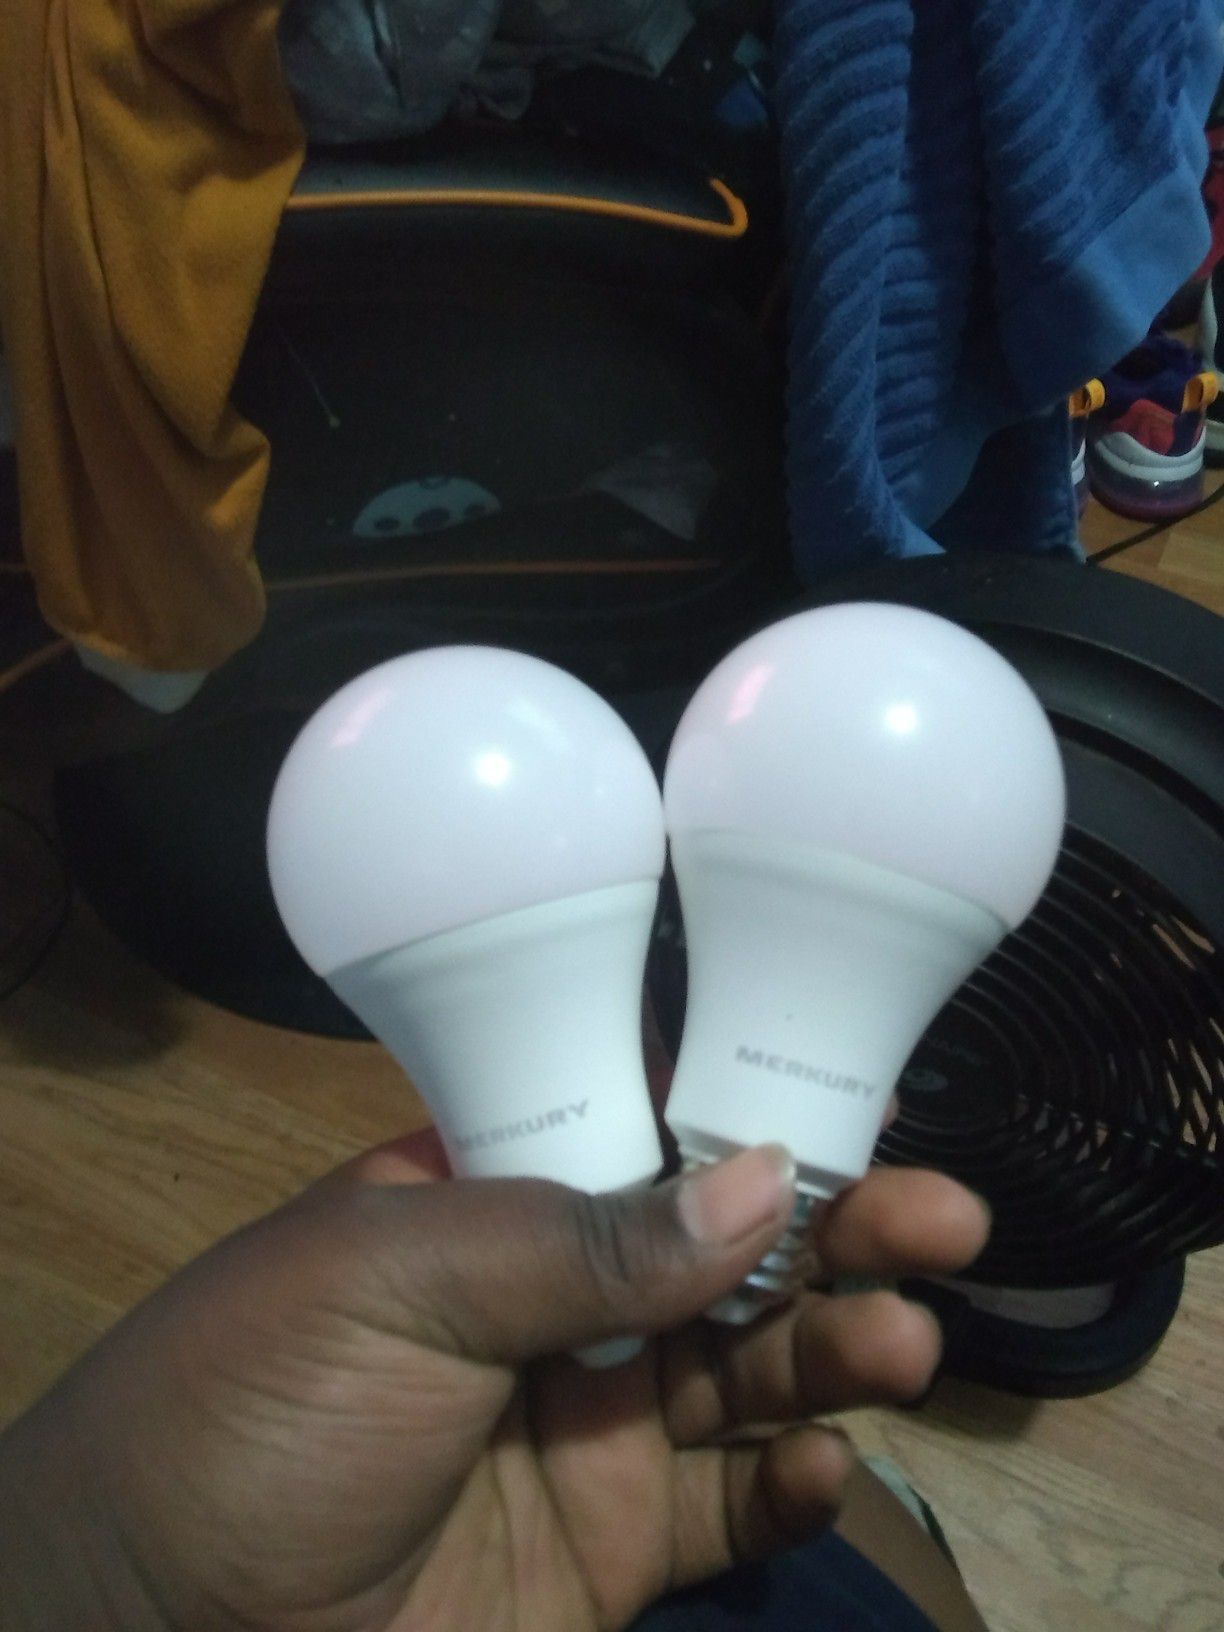 Two merkury LED light bulbs